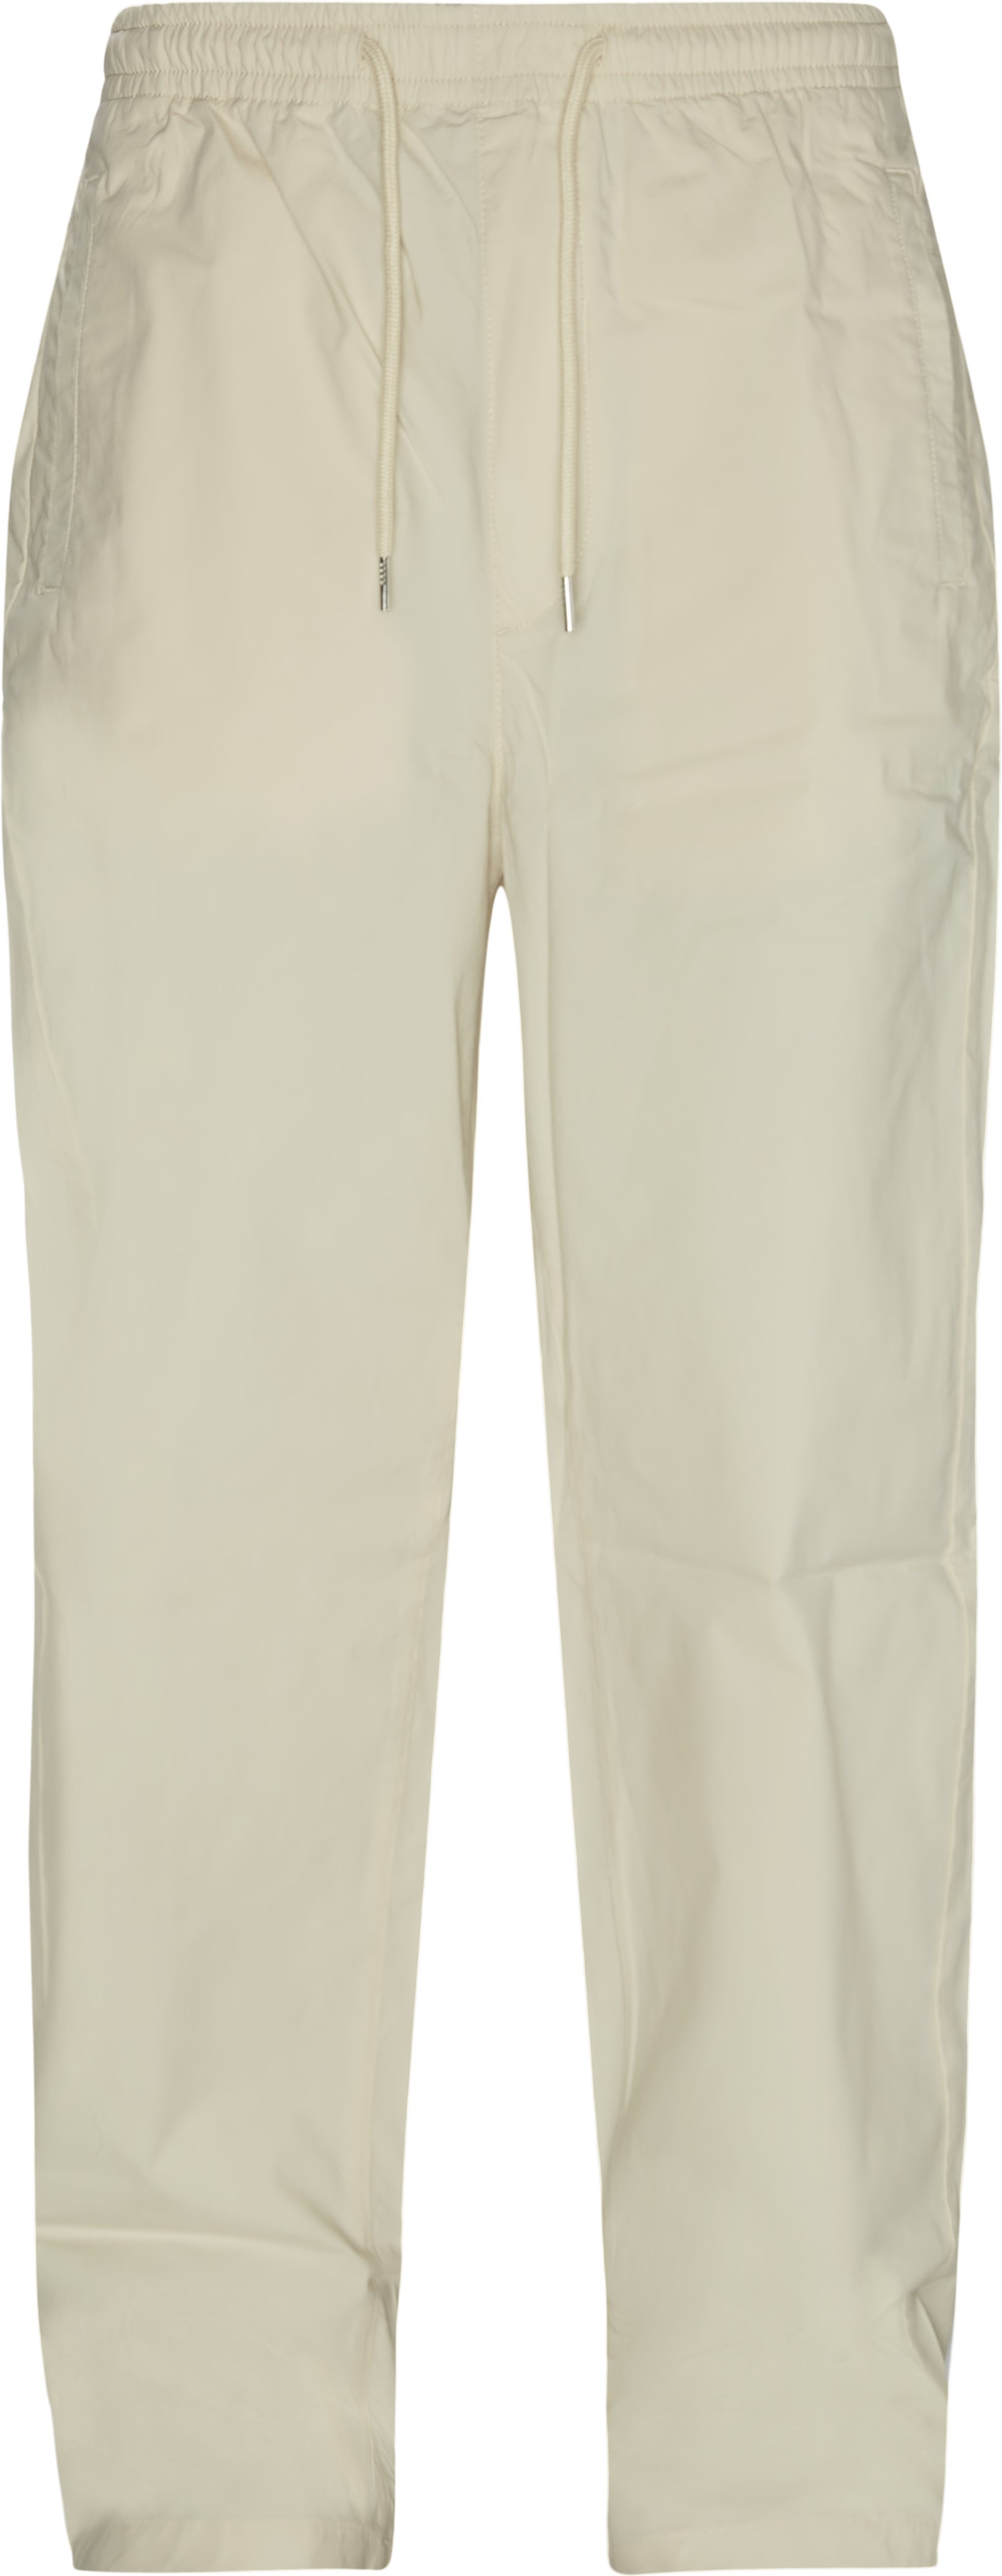 HH9435 Pants - Trousers - Regular fit - Sand